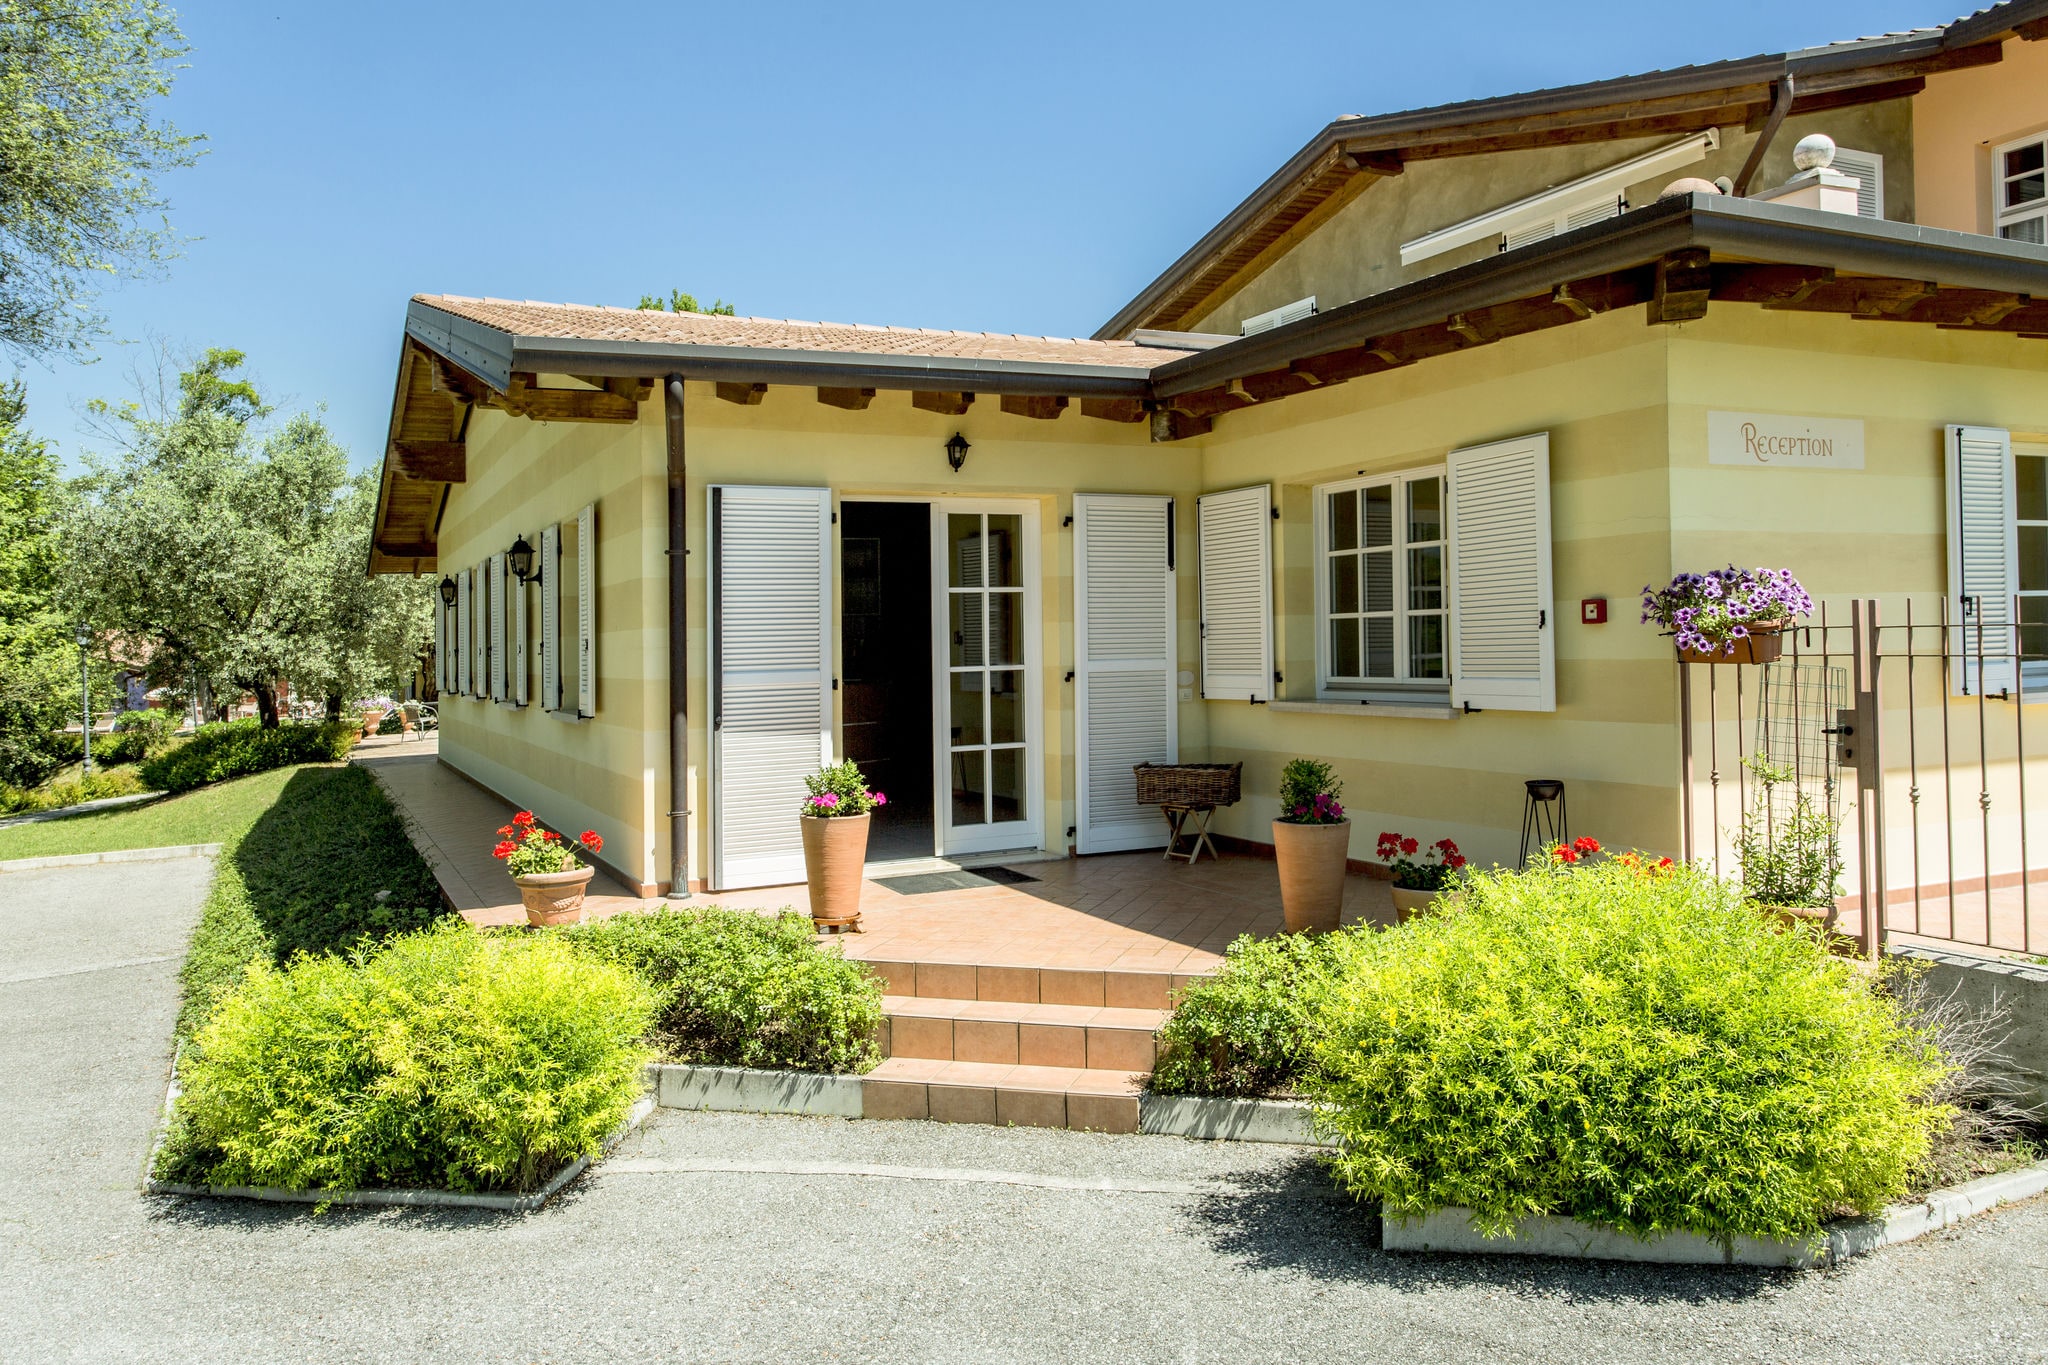 Maison de vacances moderne à Manerba del Garda, avec jardin